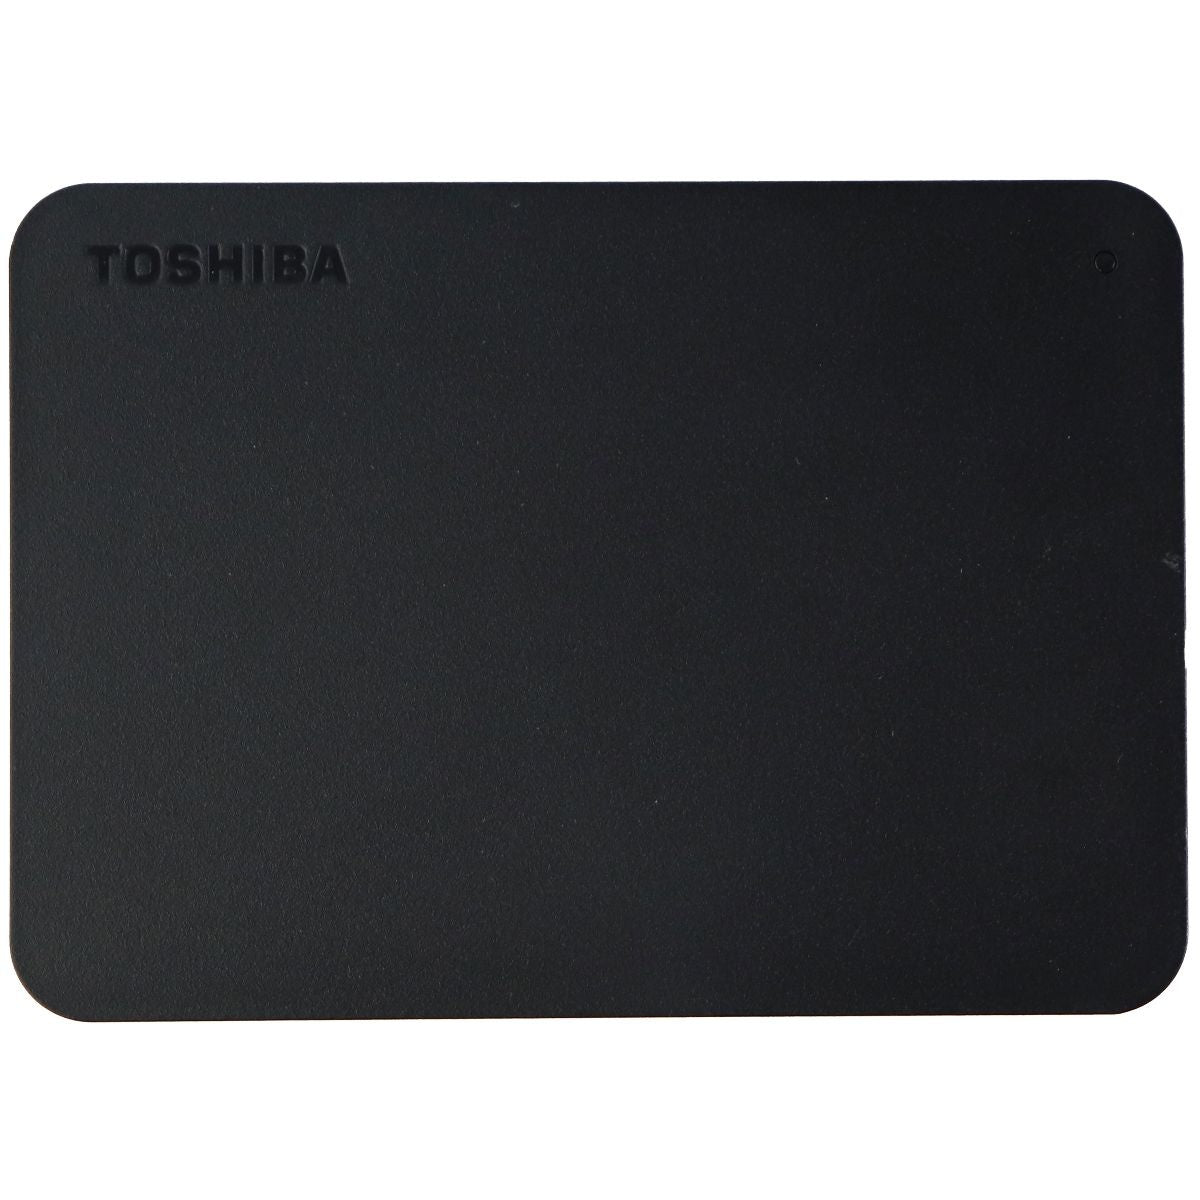 Toshiba Canvio Basics 2TB Portable External Hard Drive USB 3.0, Black (DTB420) Digital Storage - External Hard Disk Drives, HDD Toshiba    - Simple Cell Bulk Wholesale Pricing - USA Seller